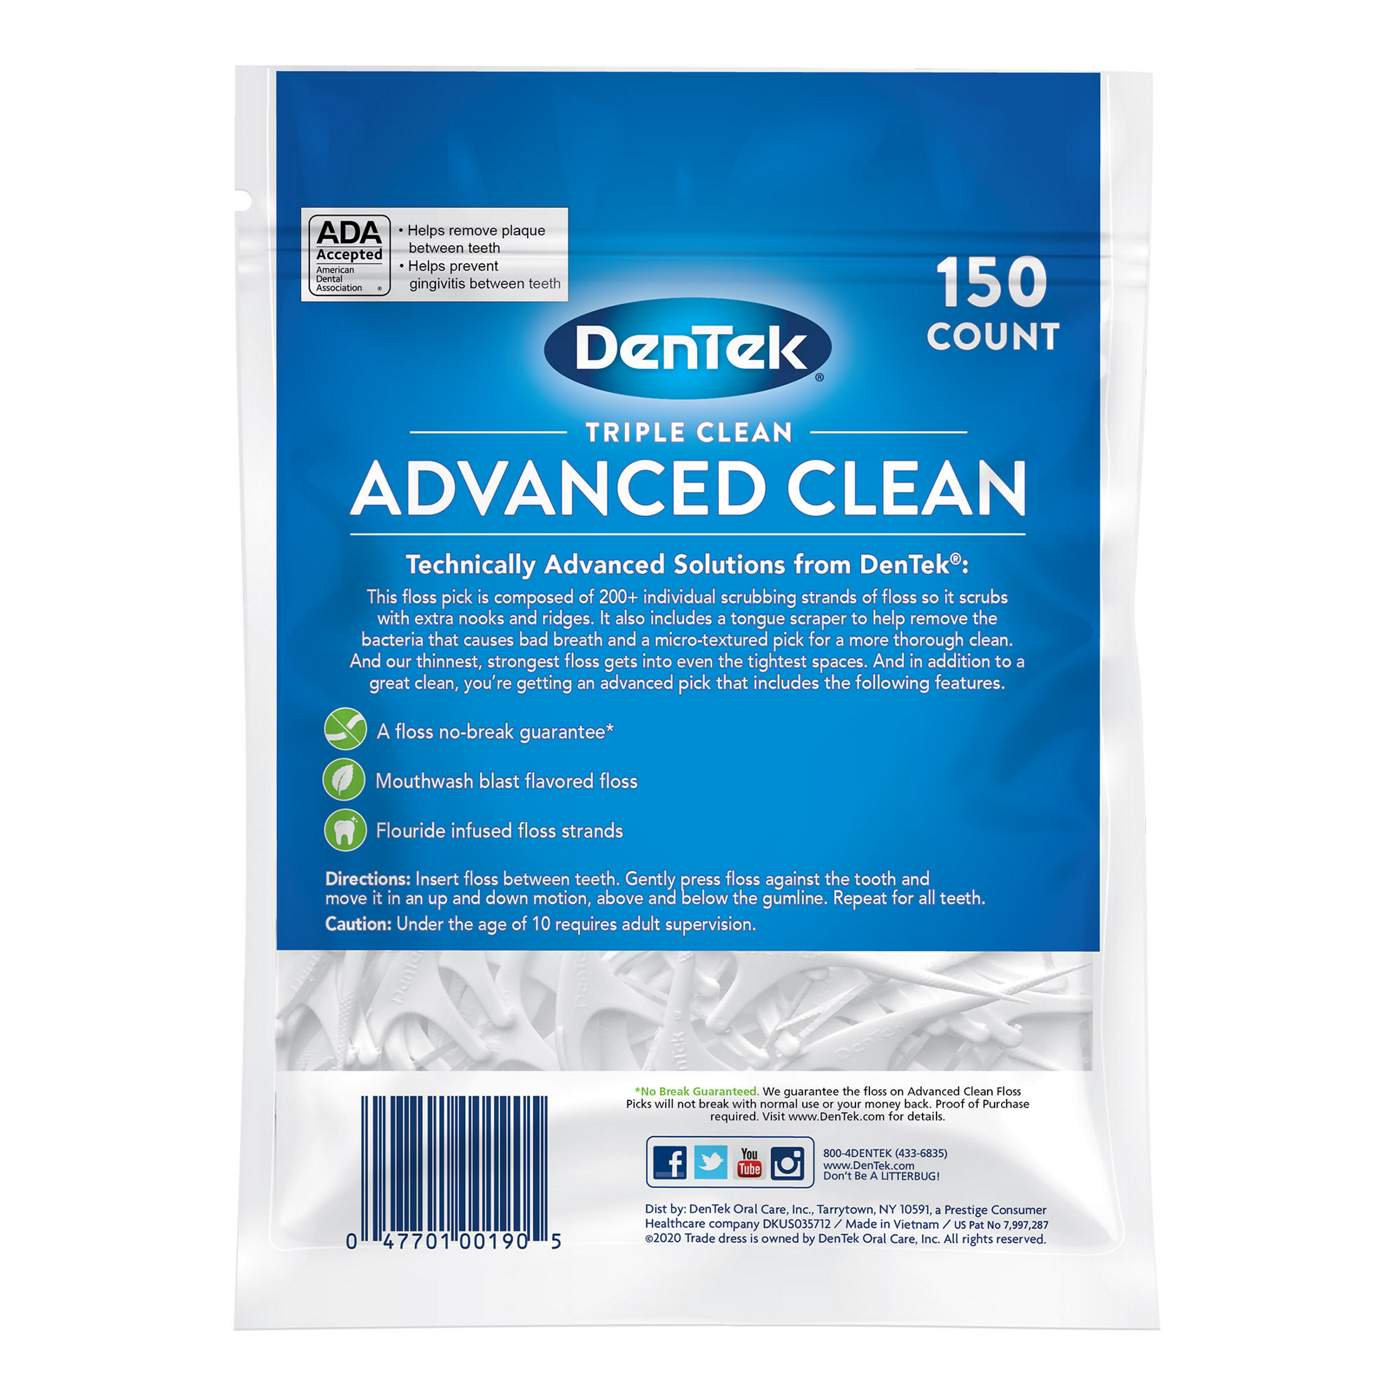 DenTek Triple Clean Advanced Clean Mouthwash Blast; image 2 of 5